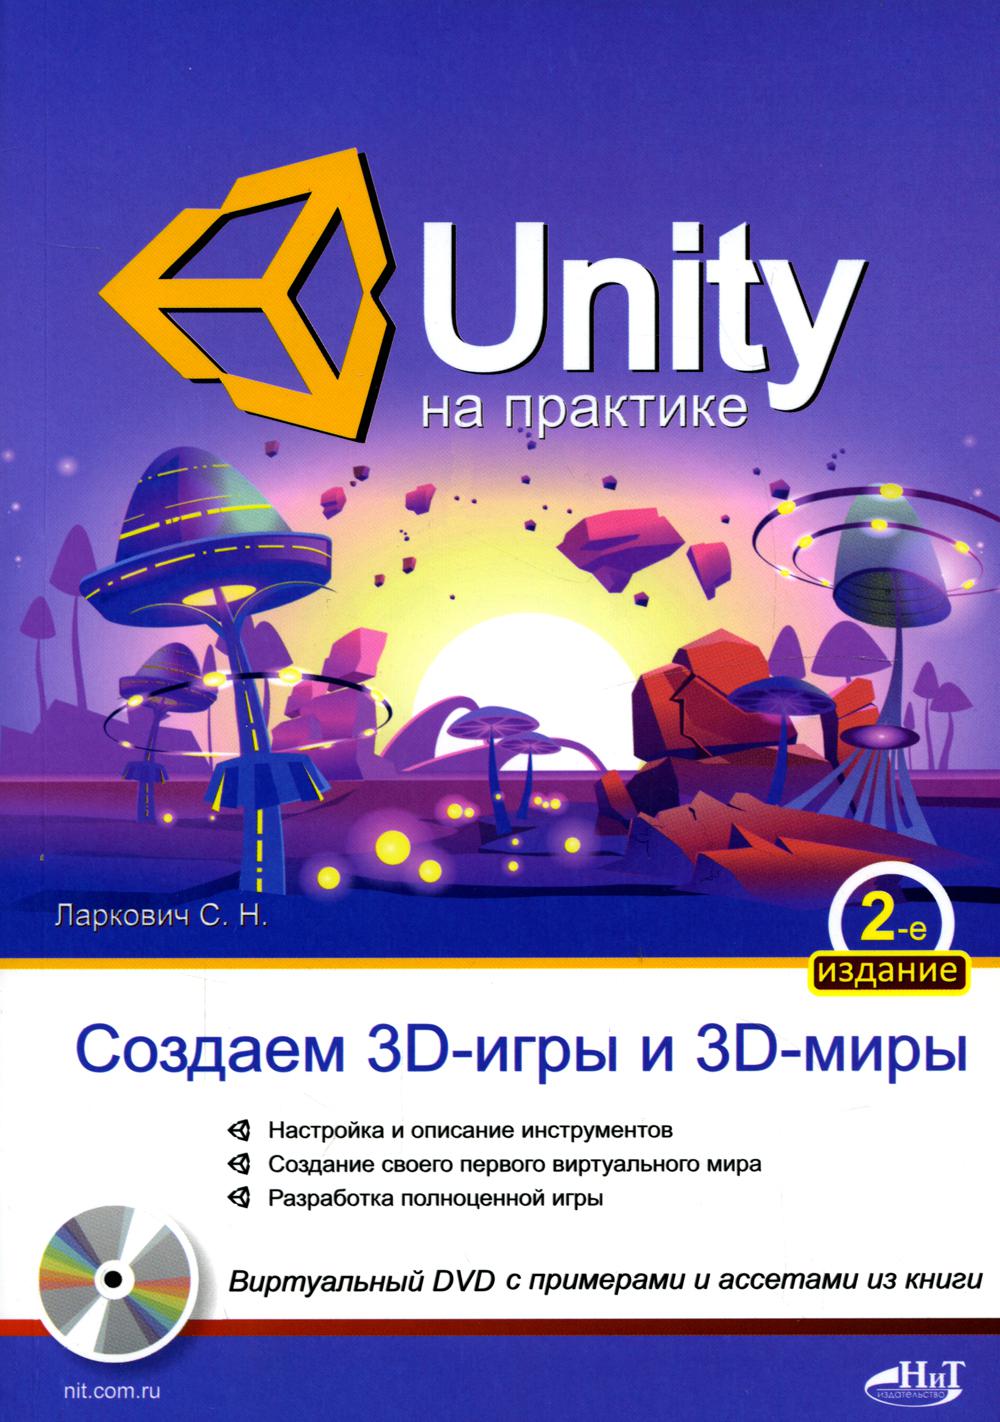 UNITY  .  3D-  3D-. 2- ., .  . (+  )